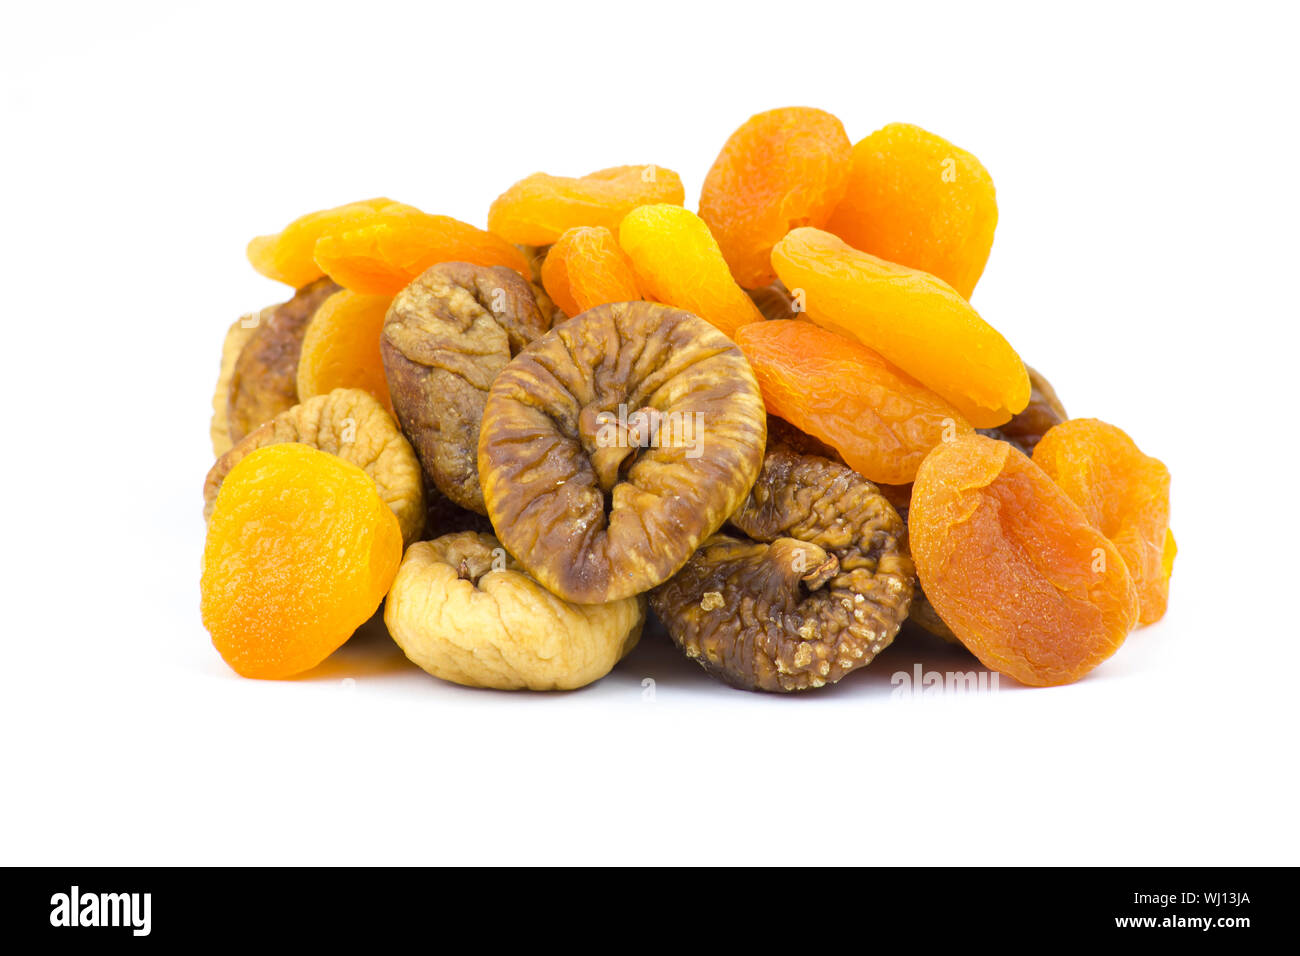 https://c8.alamy.com/comp/WJ13JA/dried-figs-and-apricots-WJ13JA.jpg